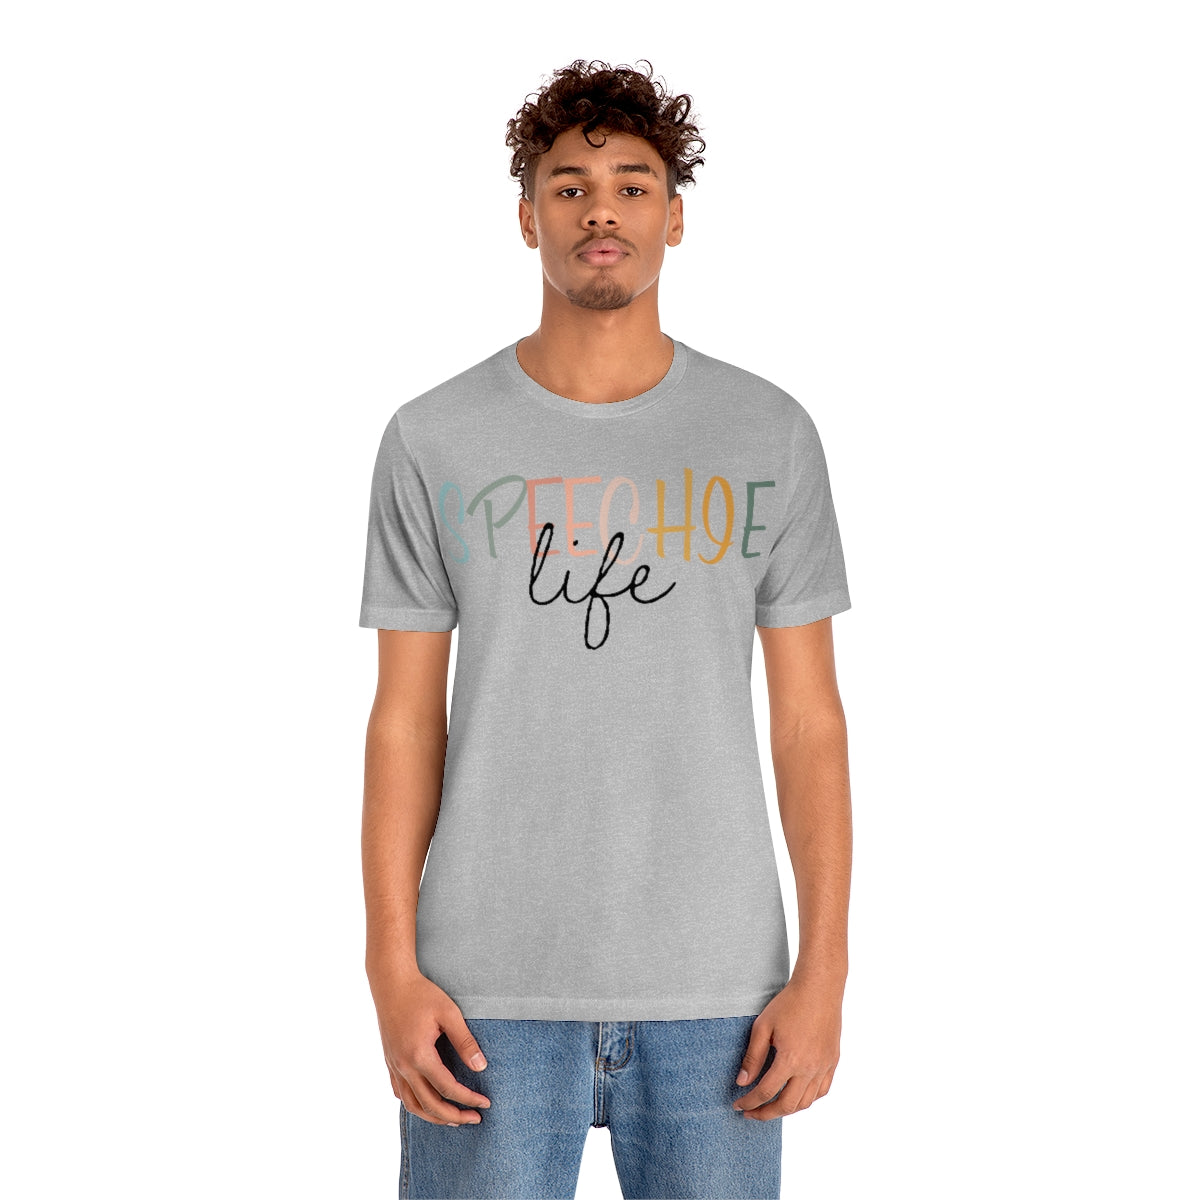 Speechie Life Shirt SLP Speech Therapy Therapist Graphic Tee